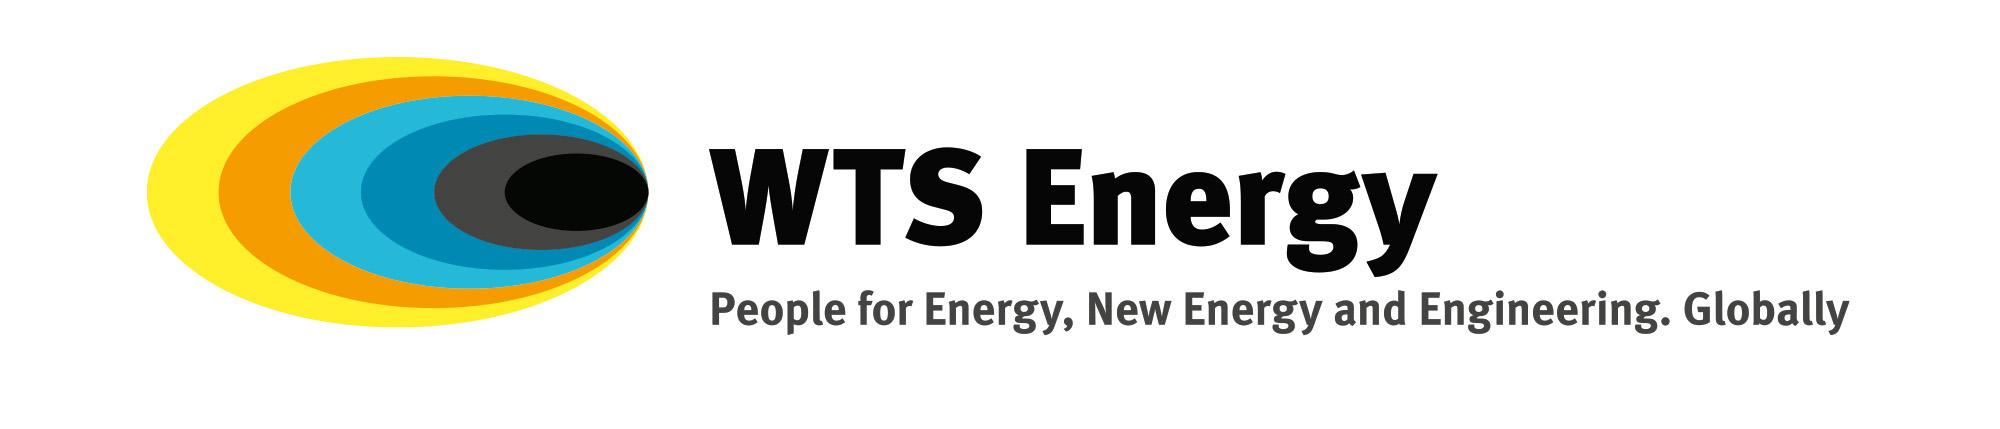 WTS Energy - vennekerdesign.com